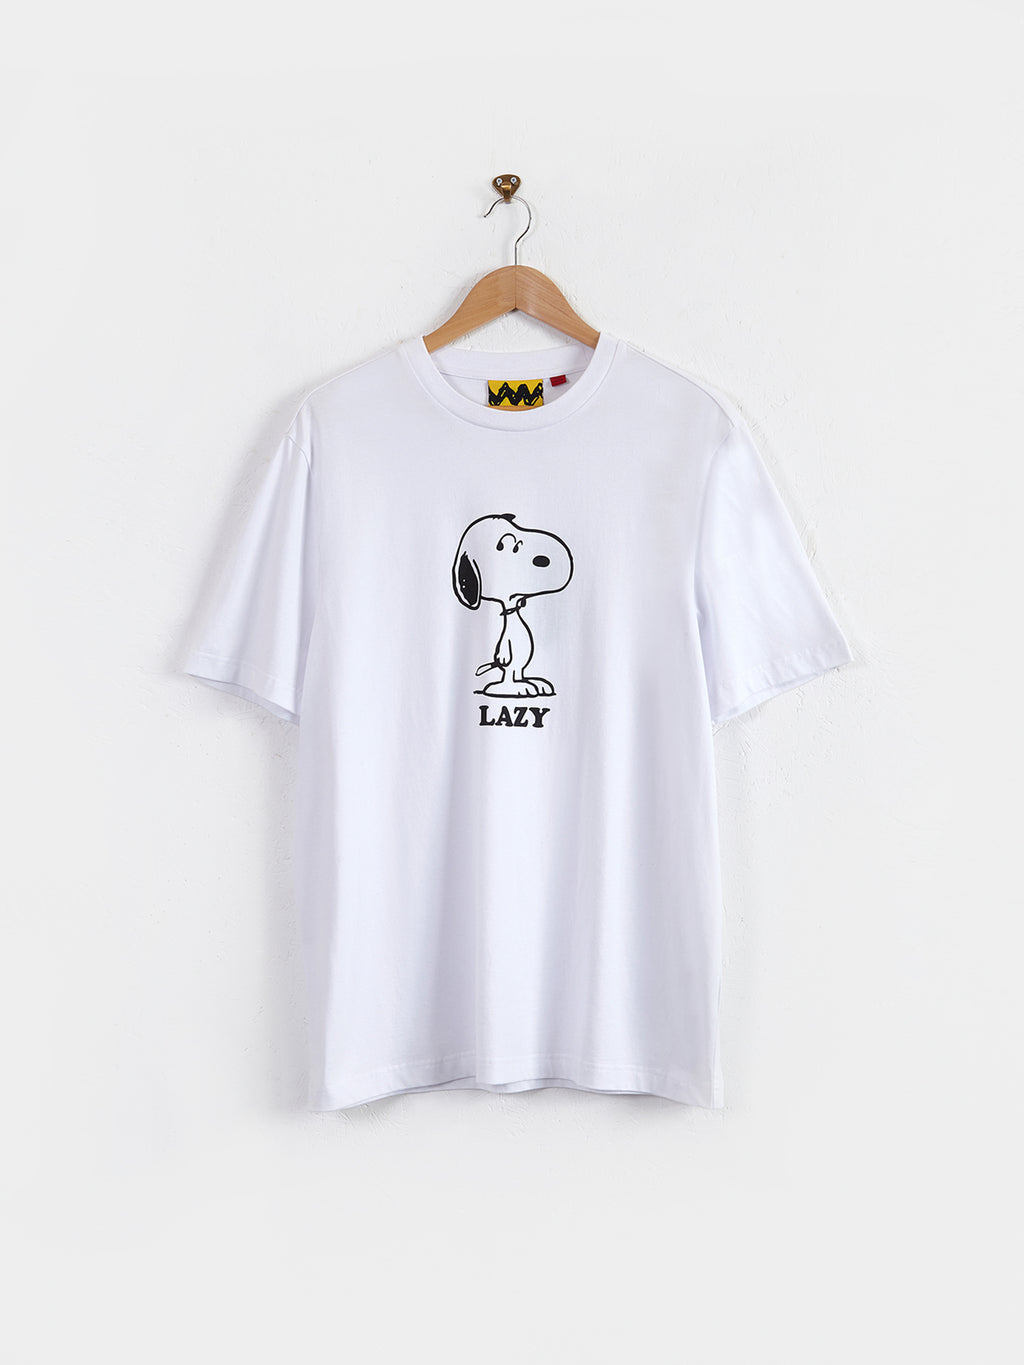 Lazy Oaf x Peanuts Lazy Snoopy T-Shirt